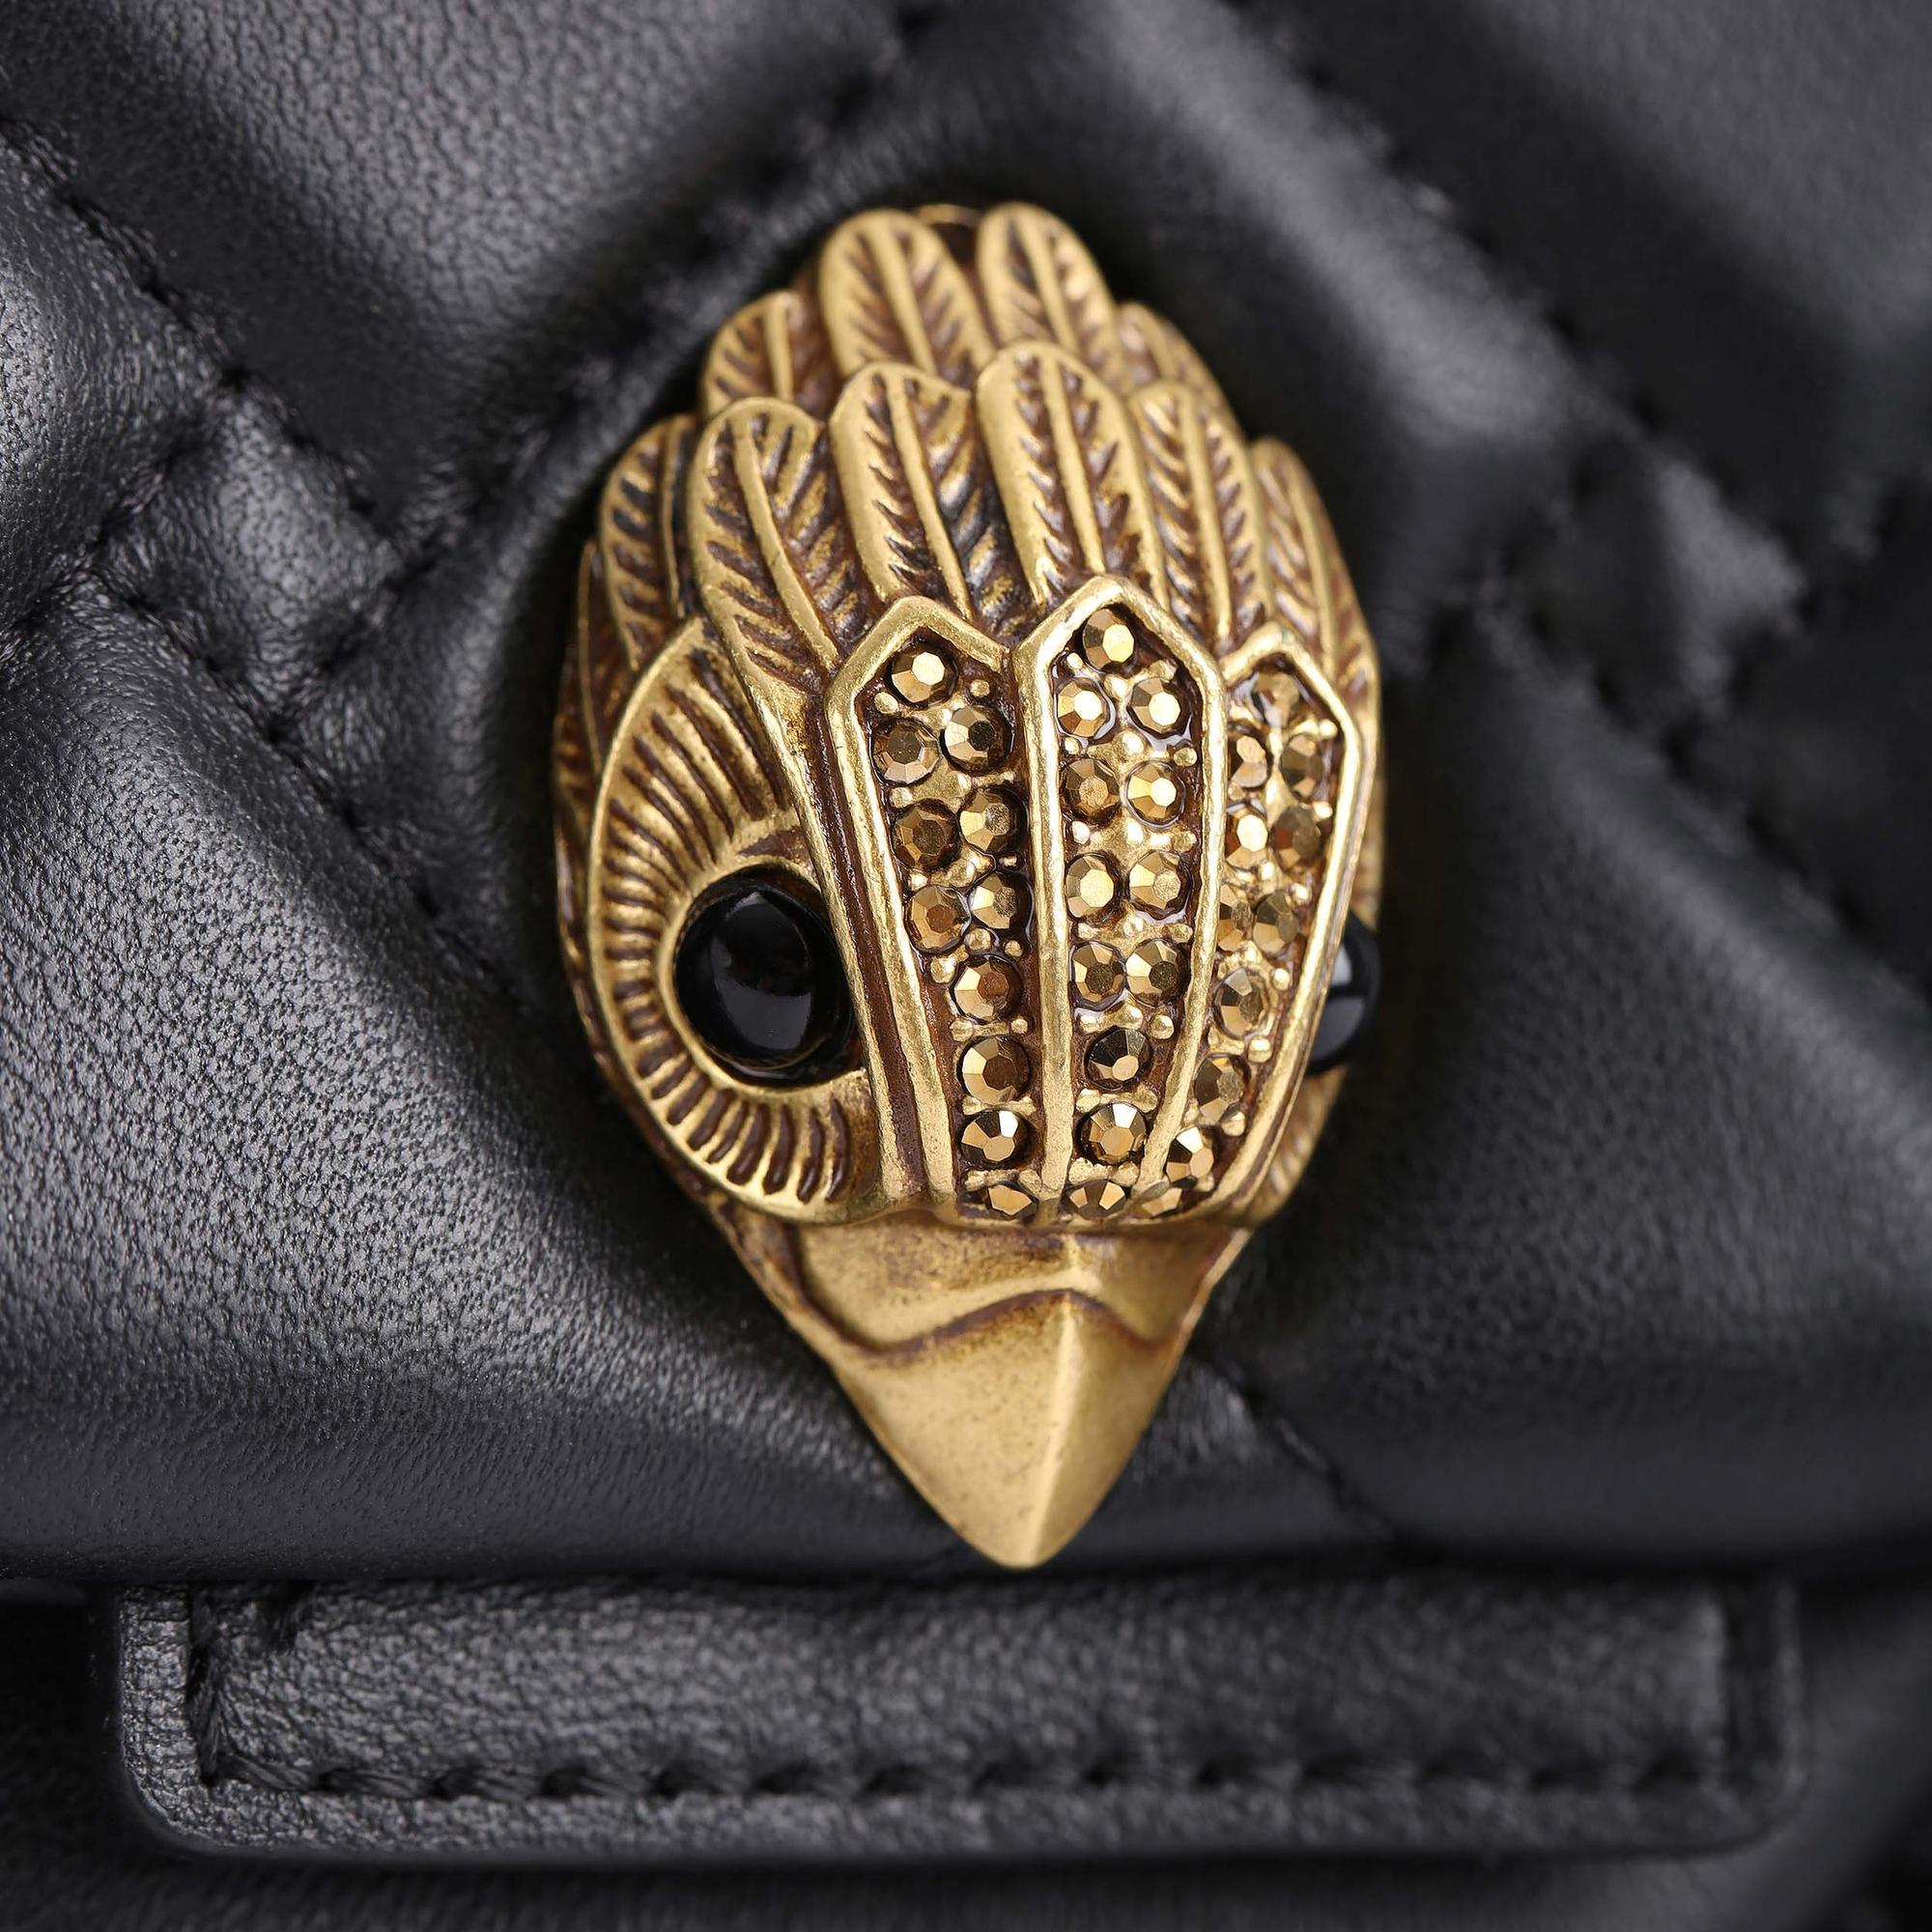 BLACK LEATHER KENSINGTON X BAG Gold Quilted Leather Bag by KURT GEIGER ...